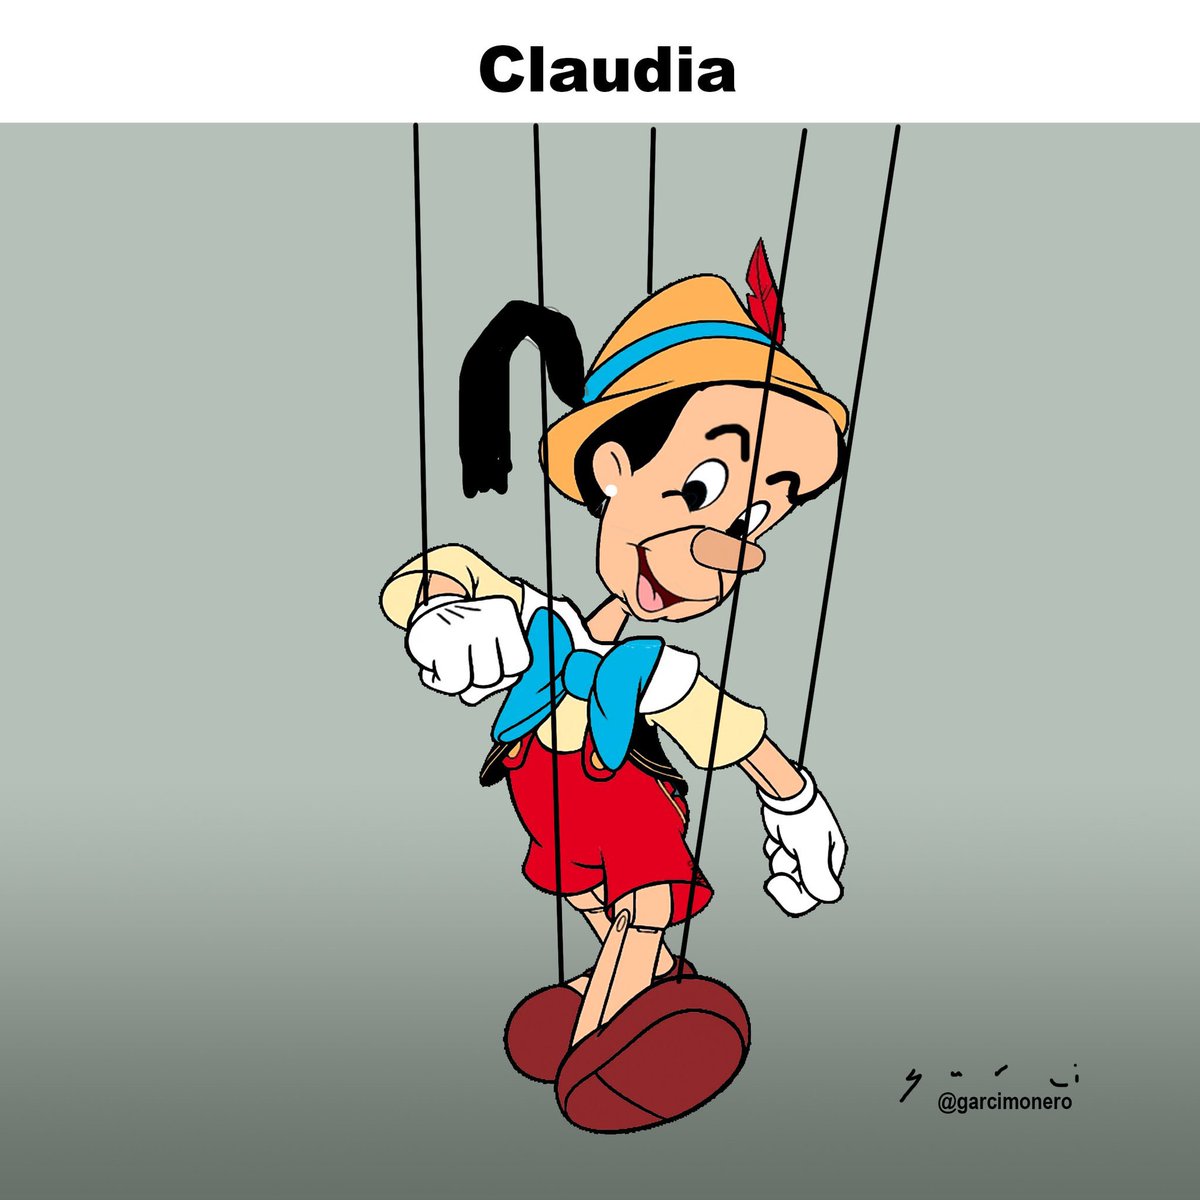 📰 Claudia (@Garcimonero)
#FelizMartes